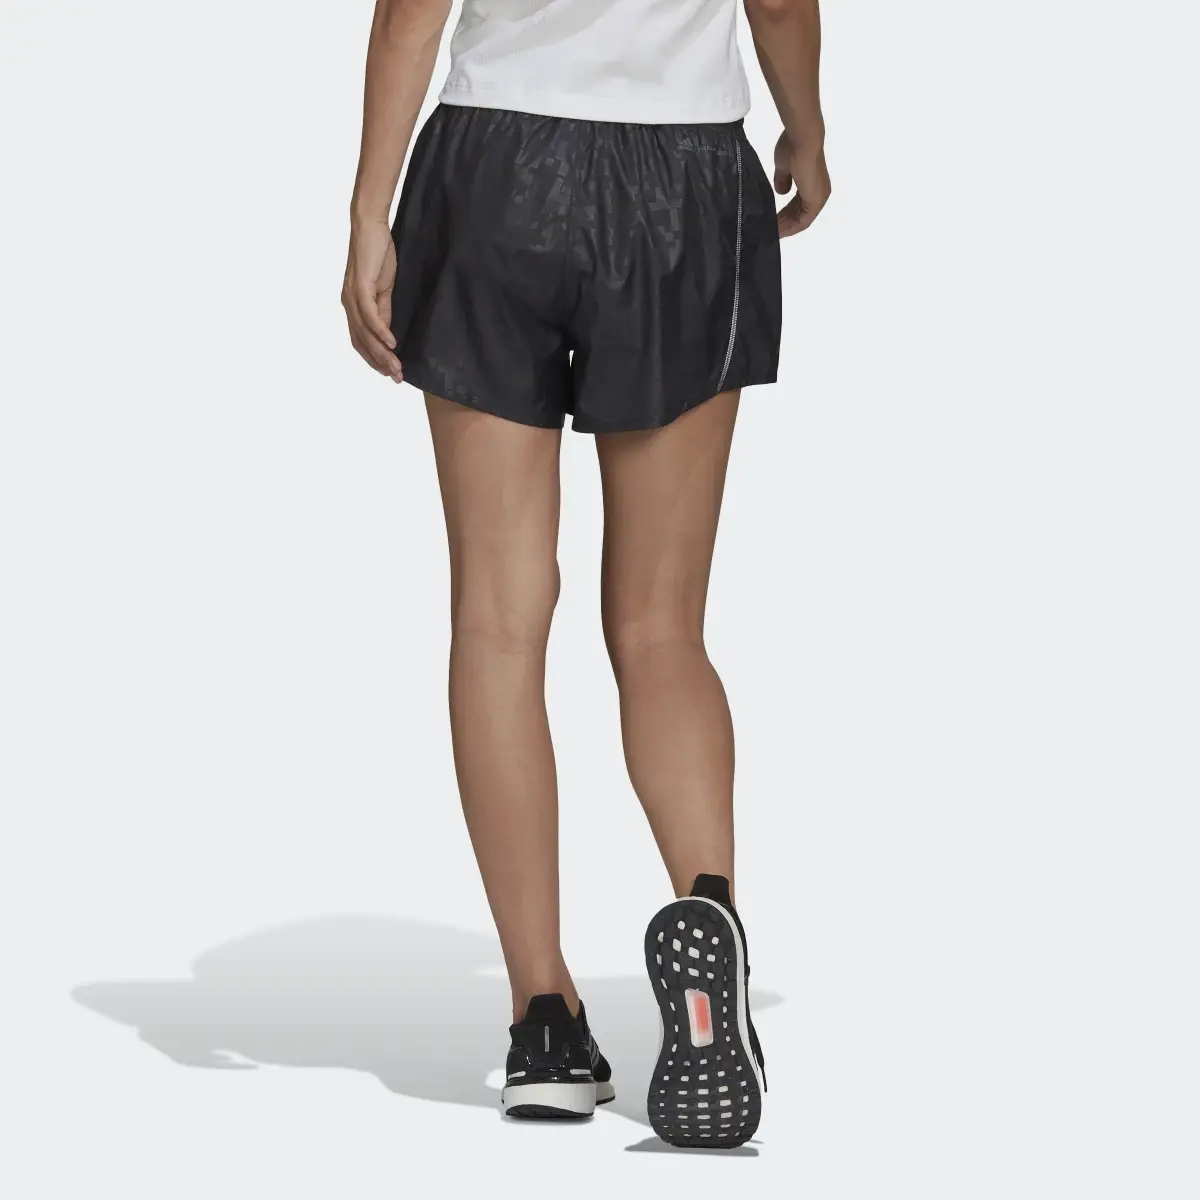 Adidas Calções de Running Karlie Kloss x adidas. 2